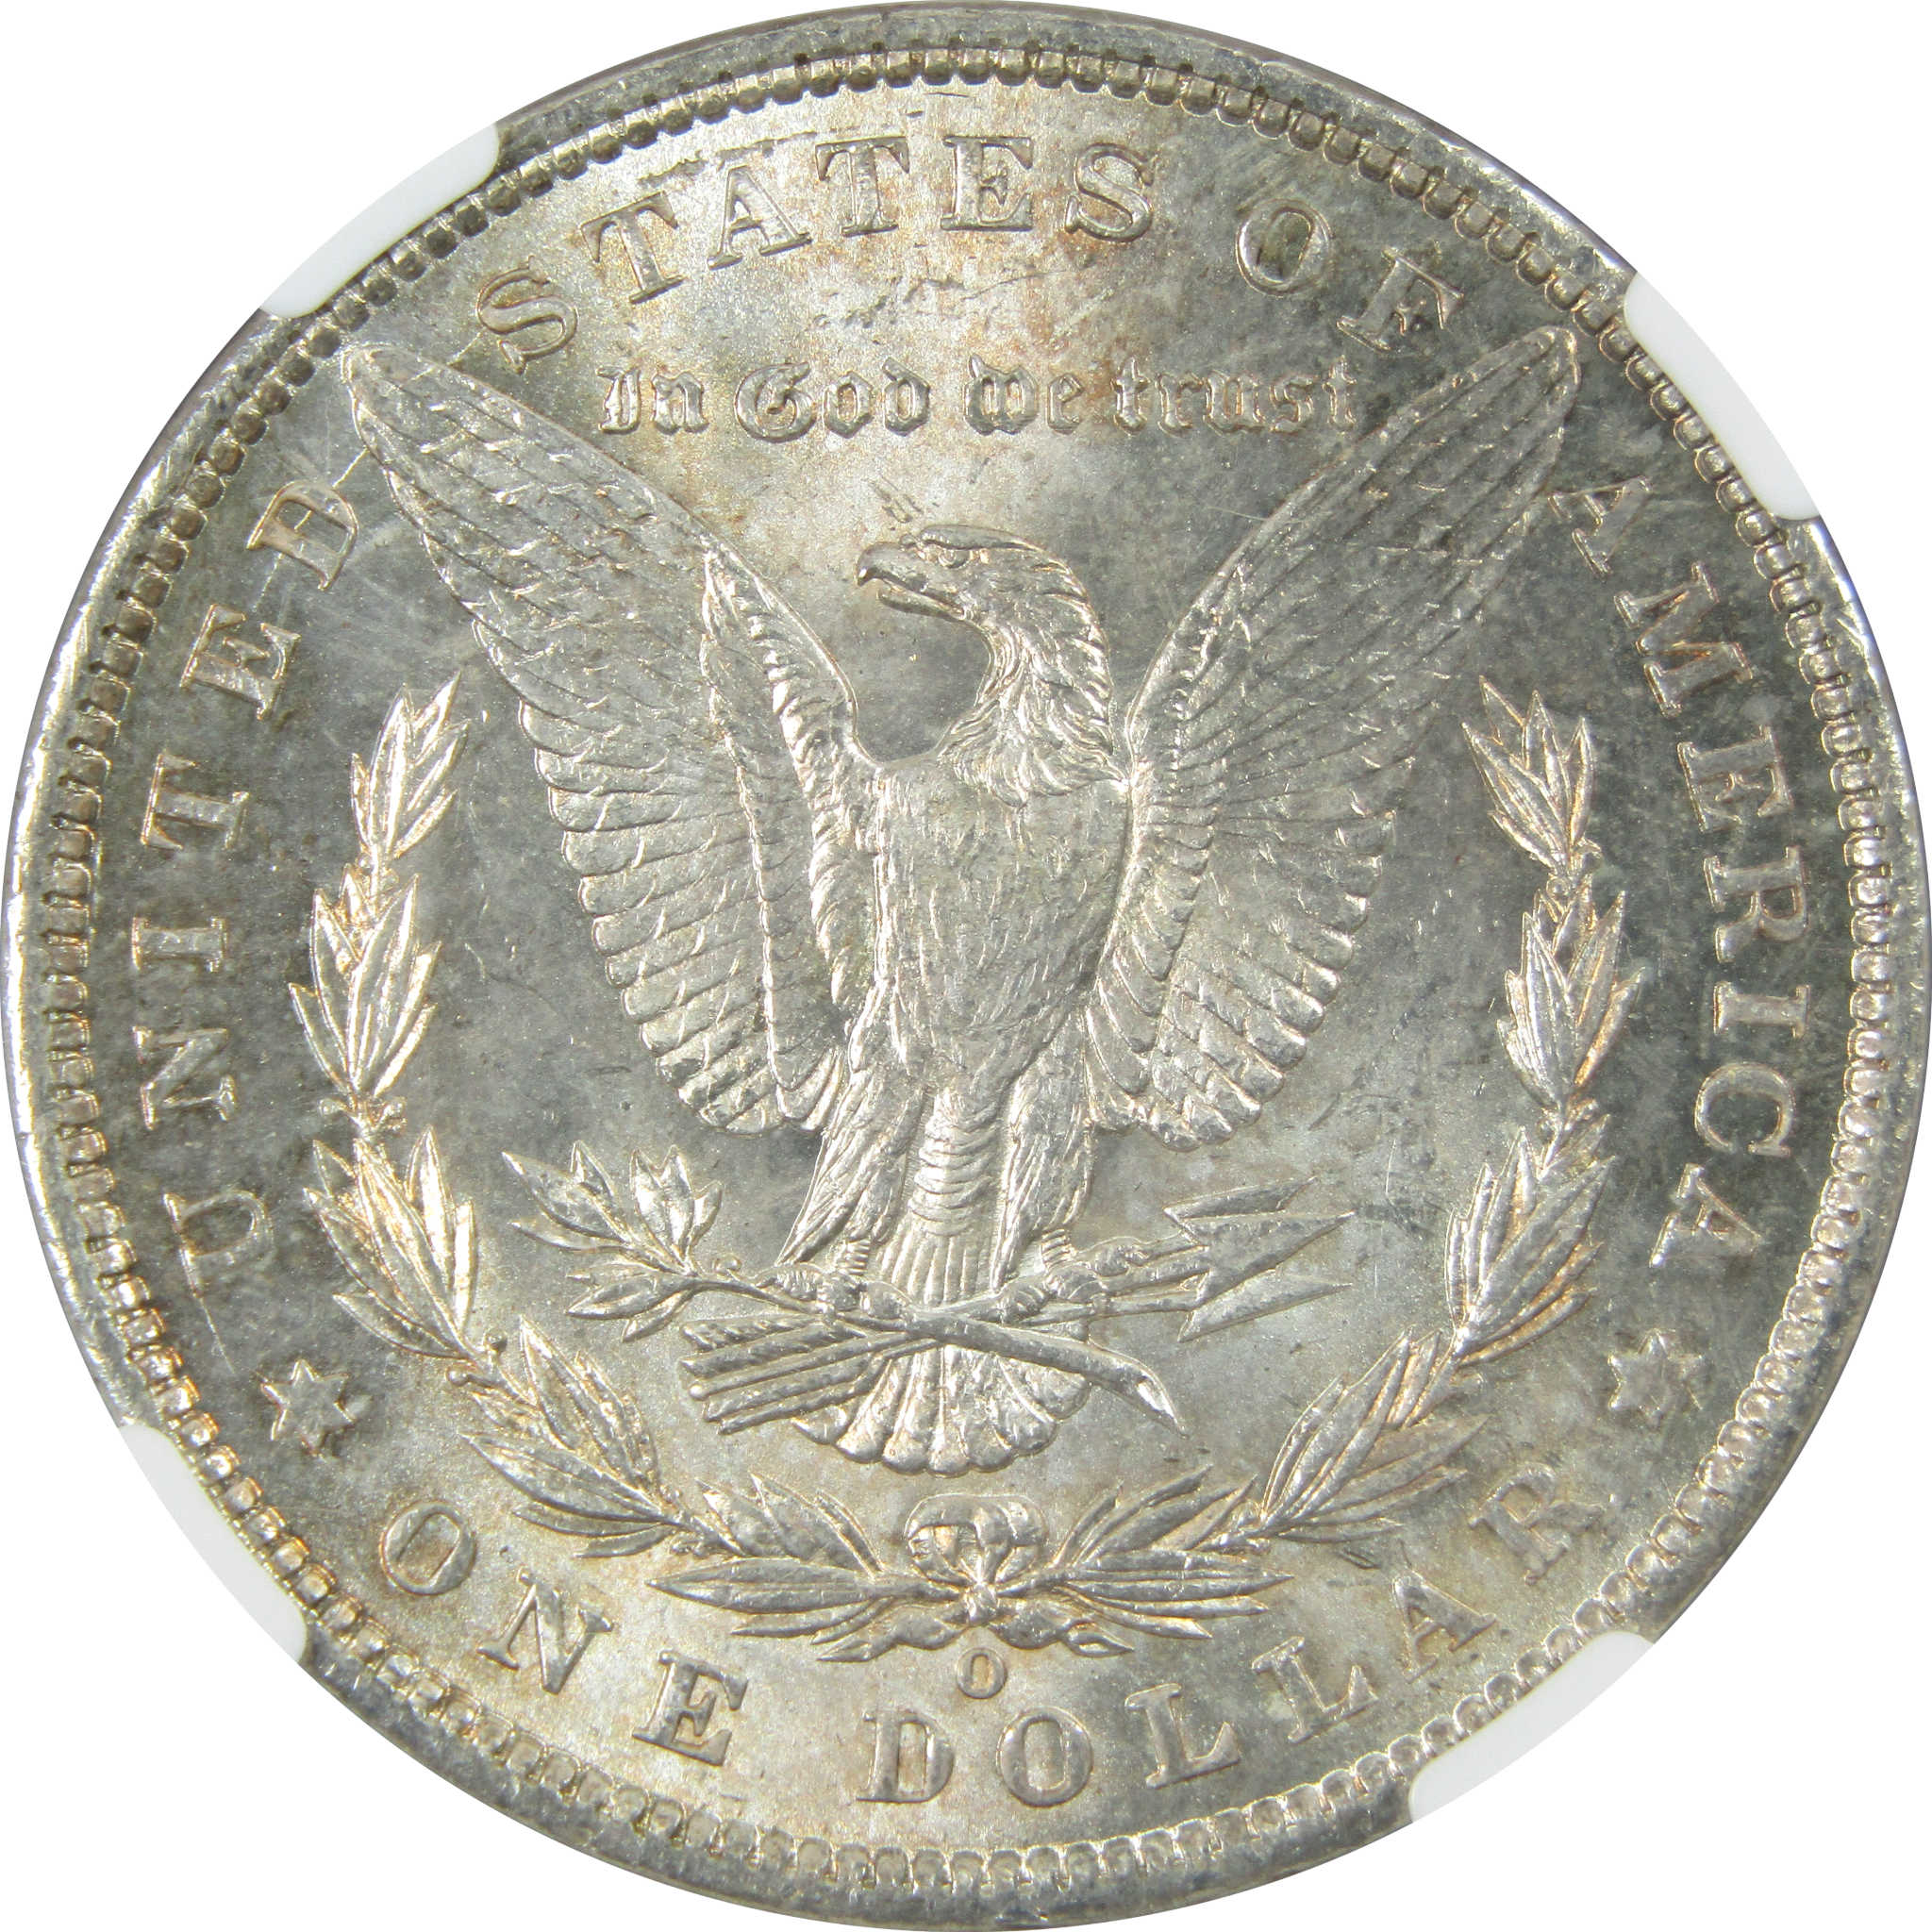 1900 O Morgan Dollar MS 64 NGC Silver $1 Uncirculated Coin SKU:I13926 - Morgan coin - Morgan silver dollar - Morgan silver dollar for sale - Profile Coins &amp; Collectibles